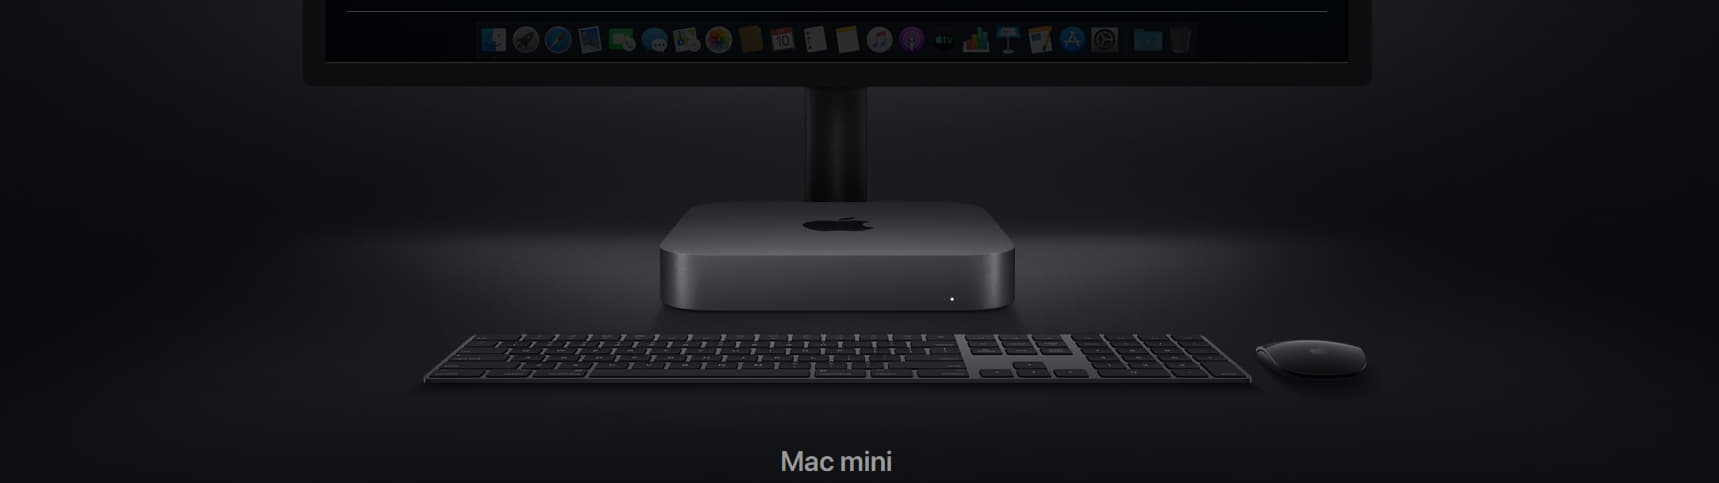 Mac Mini (2020) Apple Renews Its Compact Desktop Computers With Twice The Storage